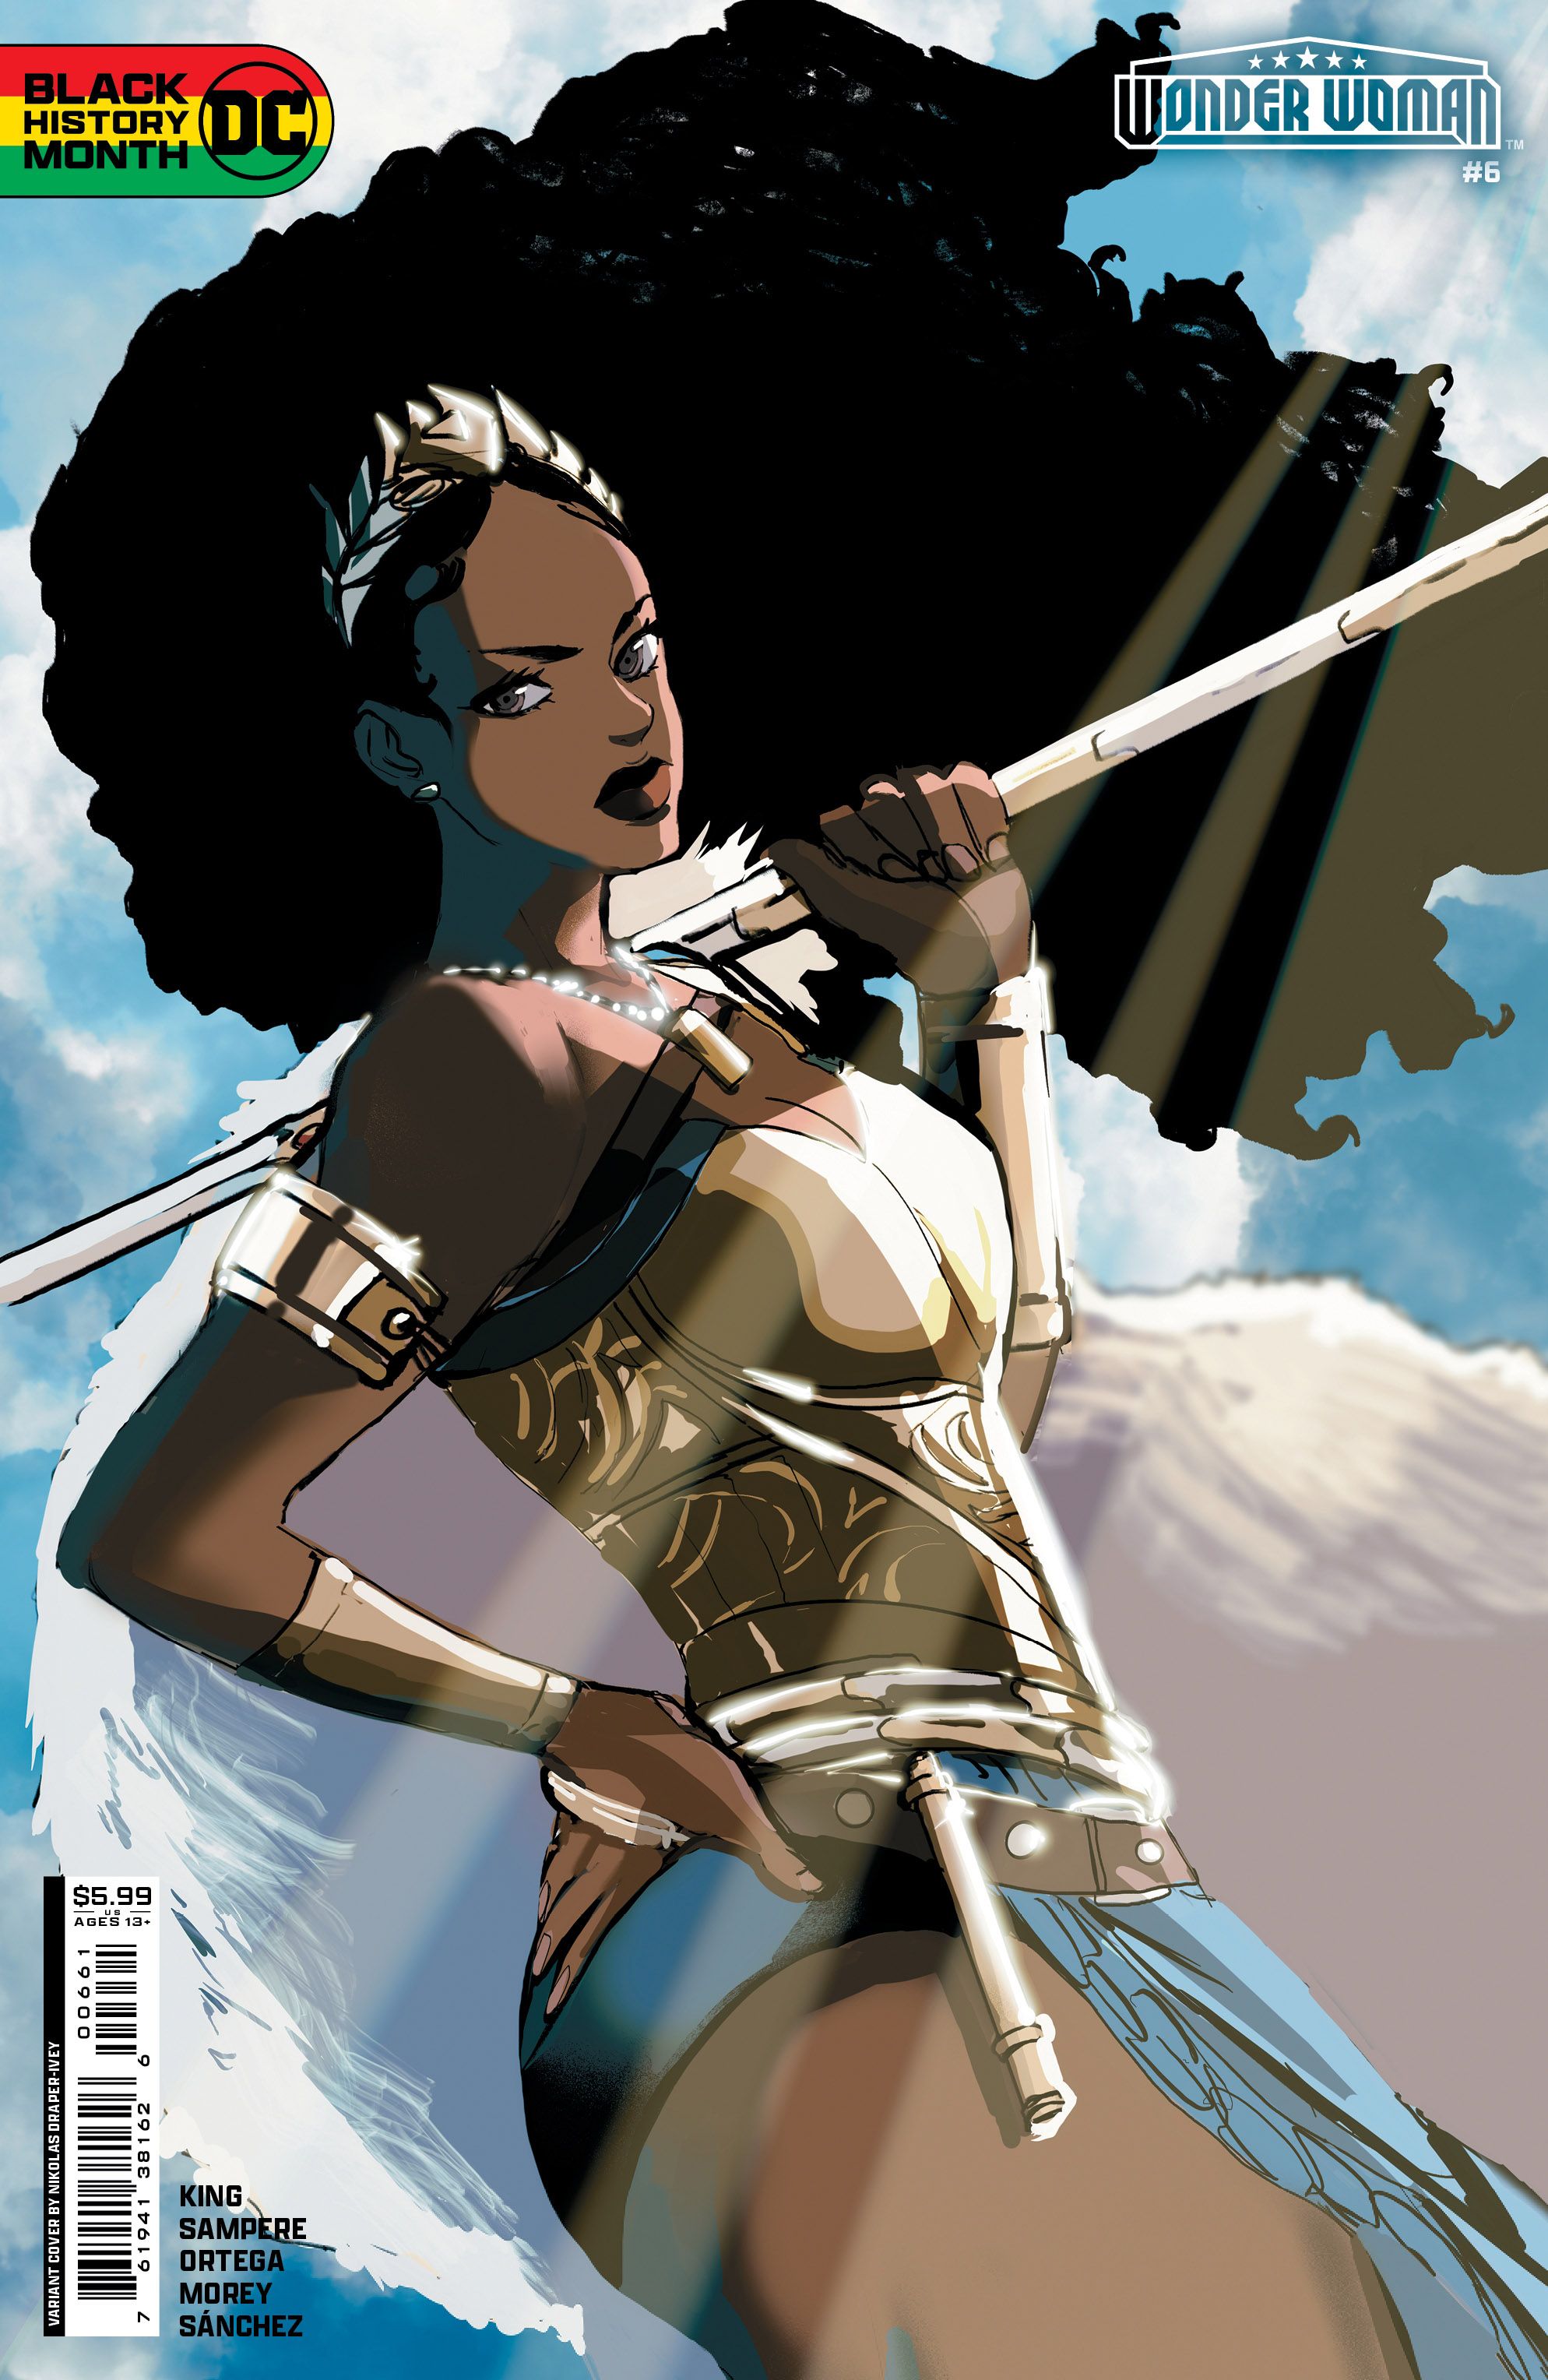 Wonder Woman #6 (Cvr D Nikolas Draper-Ivey Black History Month Card Stock Variant) Comic